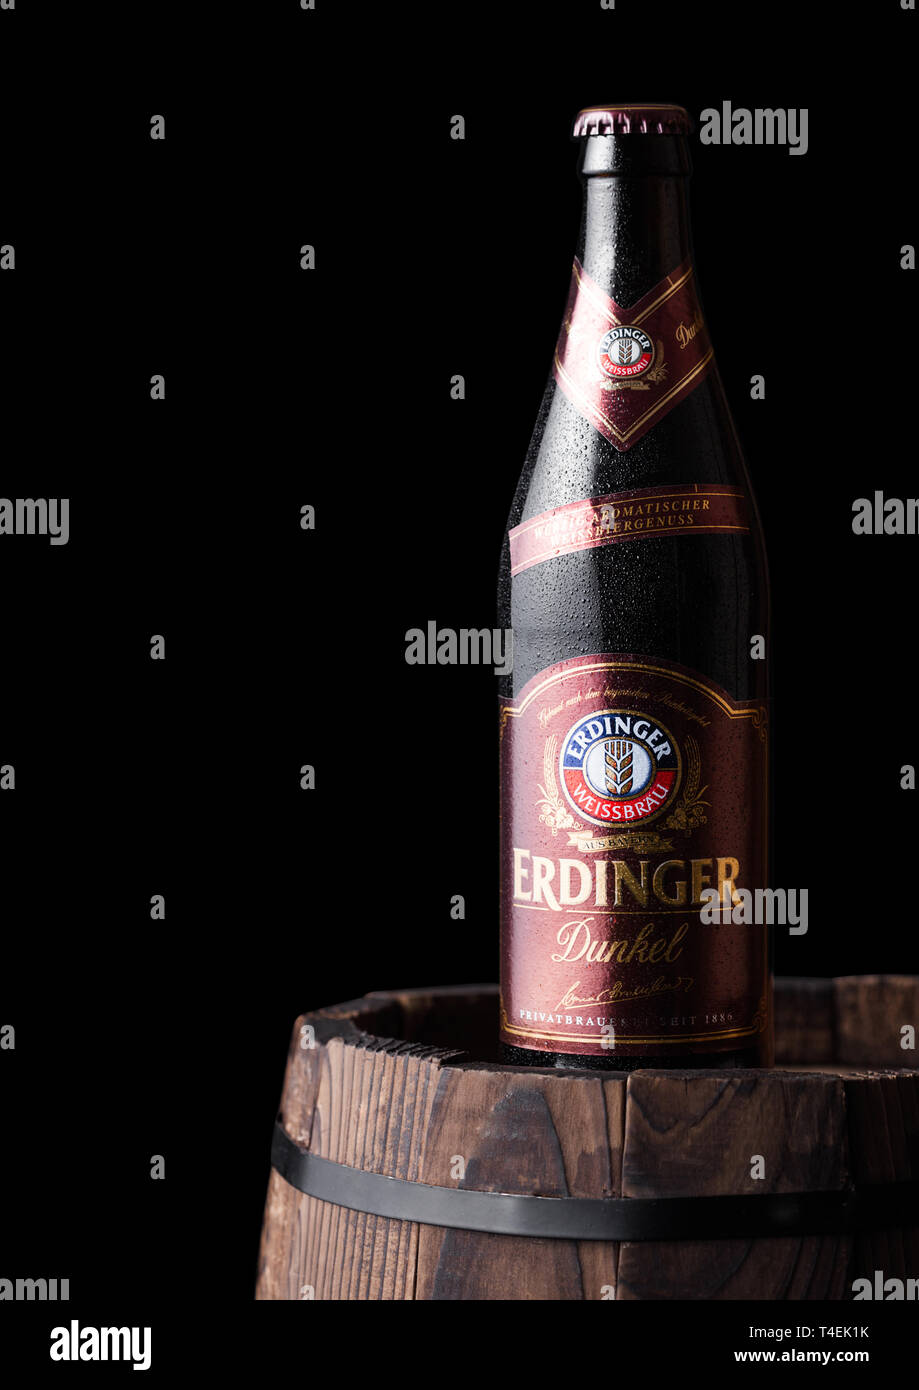 LONDON, UK - JULY 28, 2018: Bottle of Erdinger Dunkel beer on a wooden barrel and black background.Erdinger is the product of the world's largest whea Stock Photo